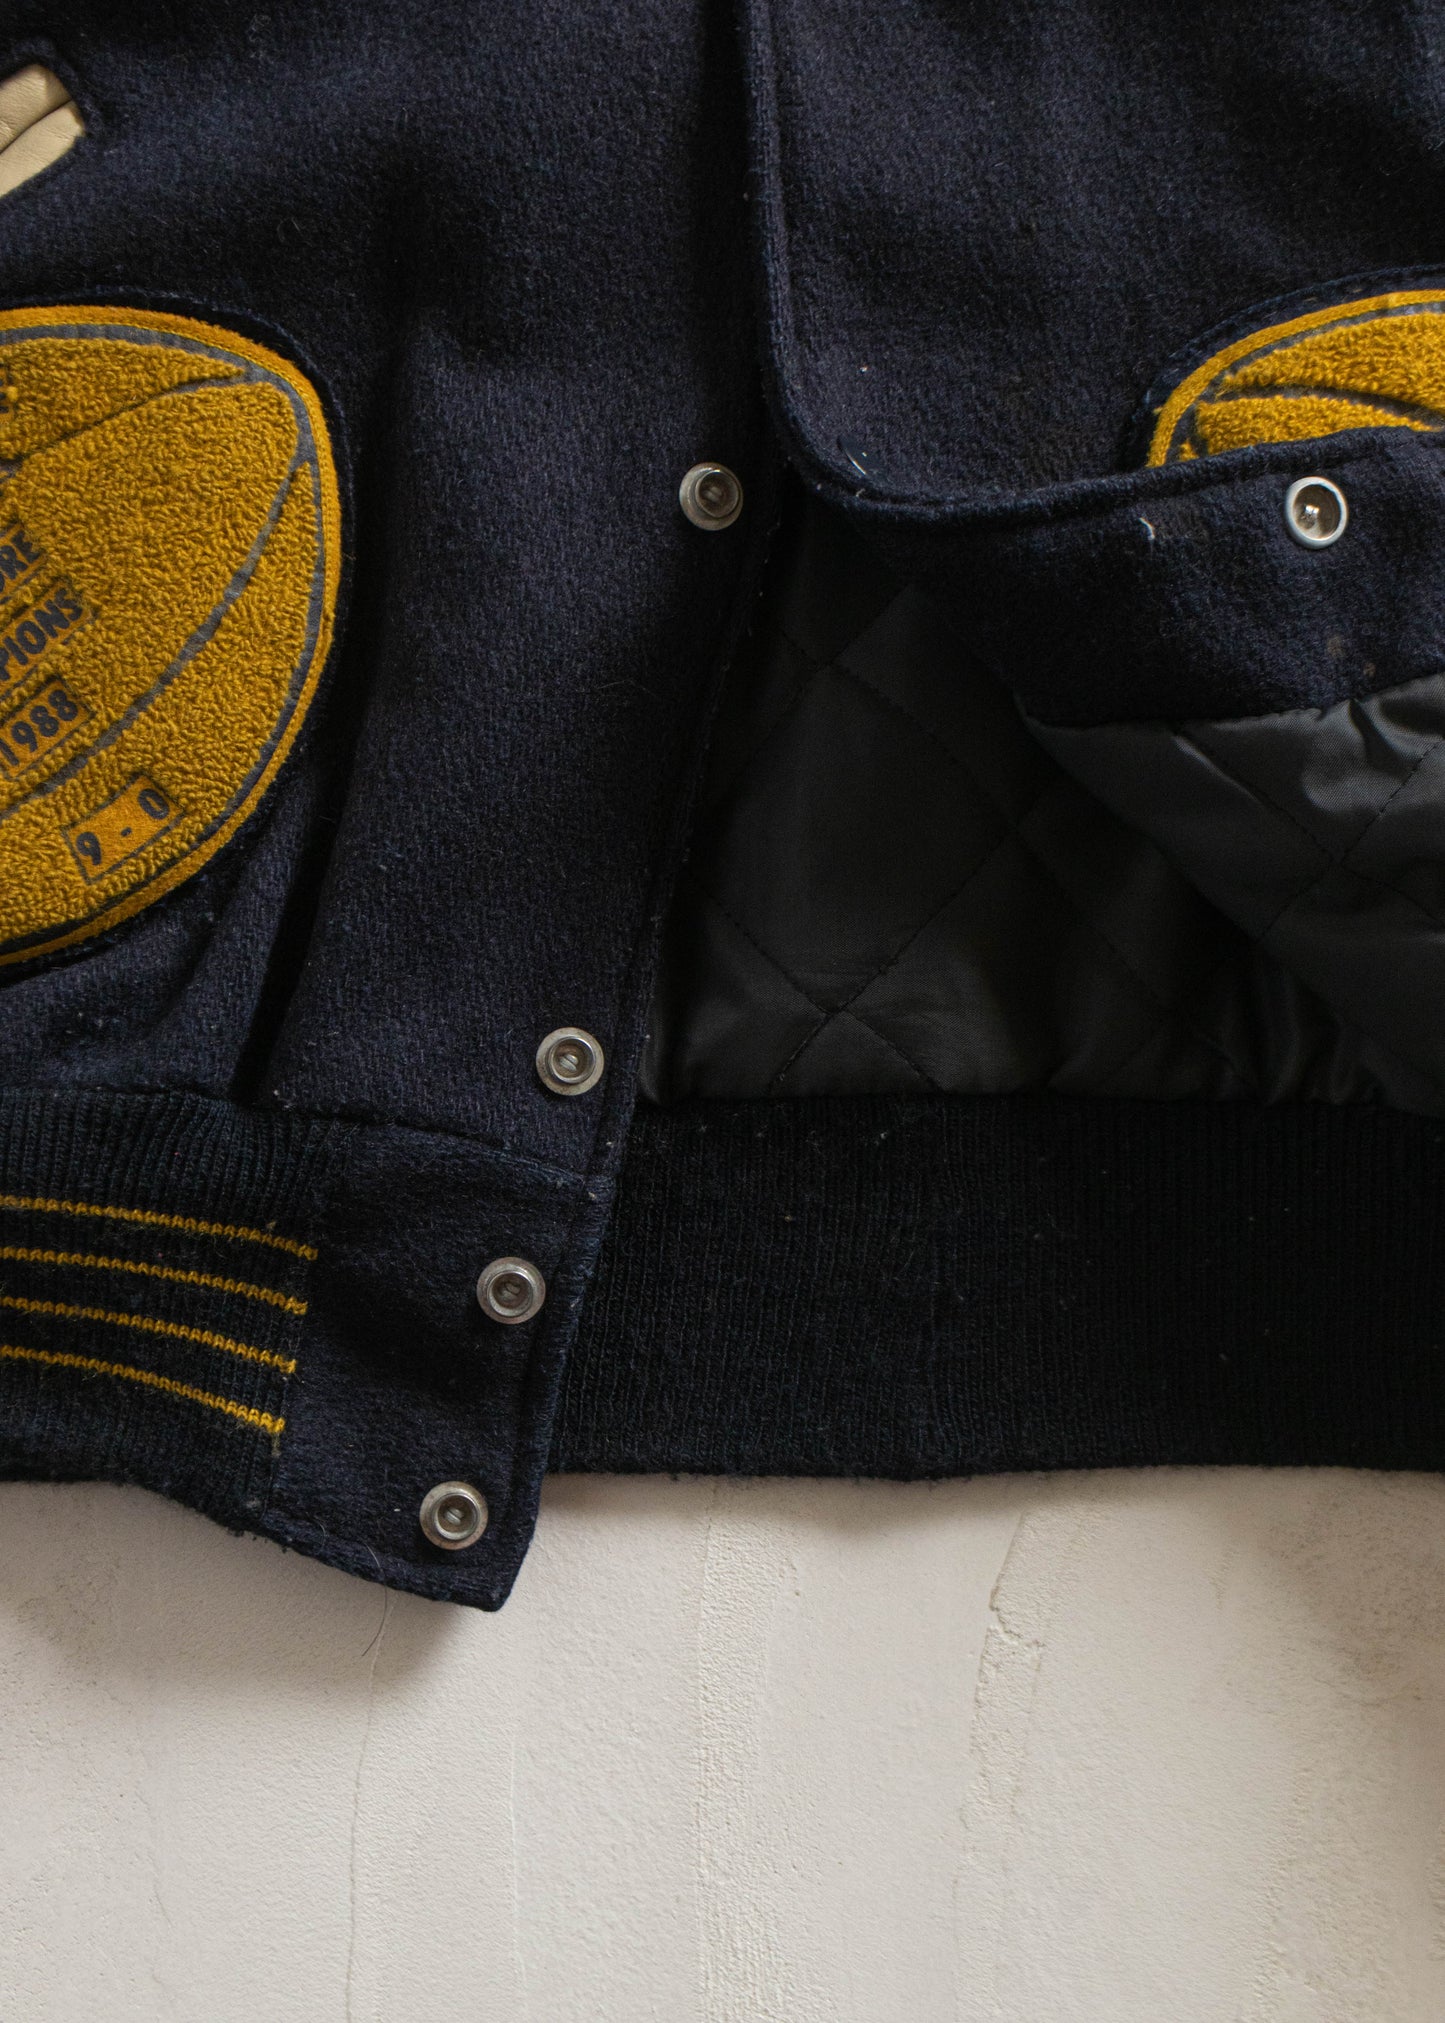 Vintage 1980s DeLong Marquette Hilltoppers Varsity Jacket Size 2XL/3XL